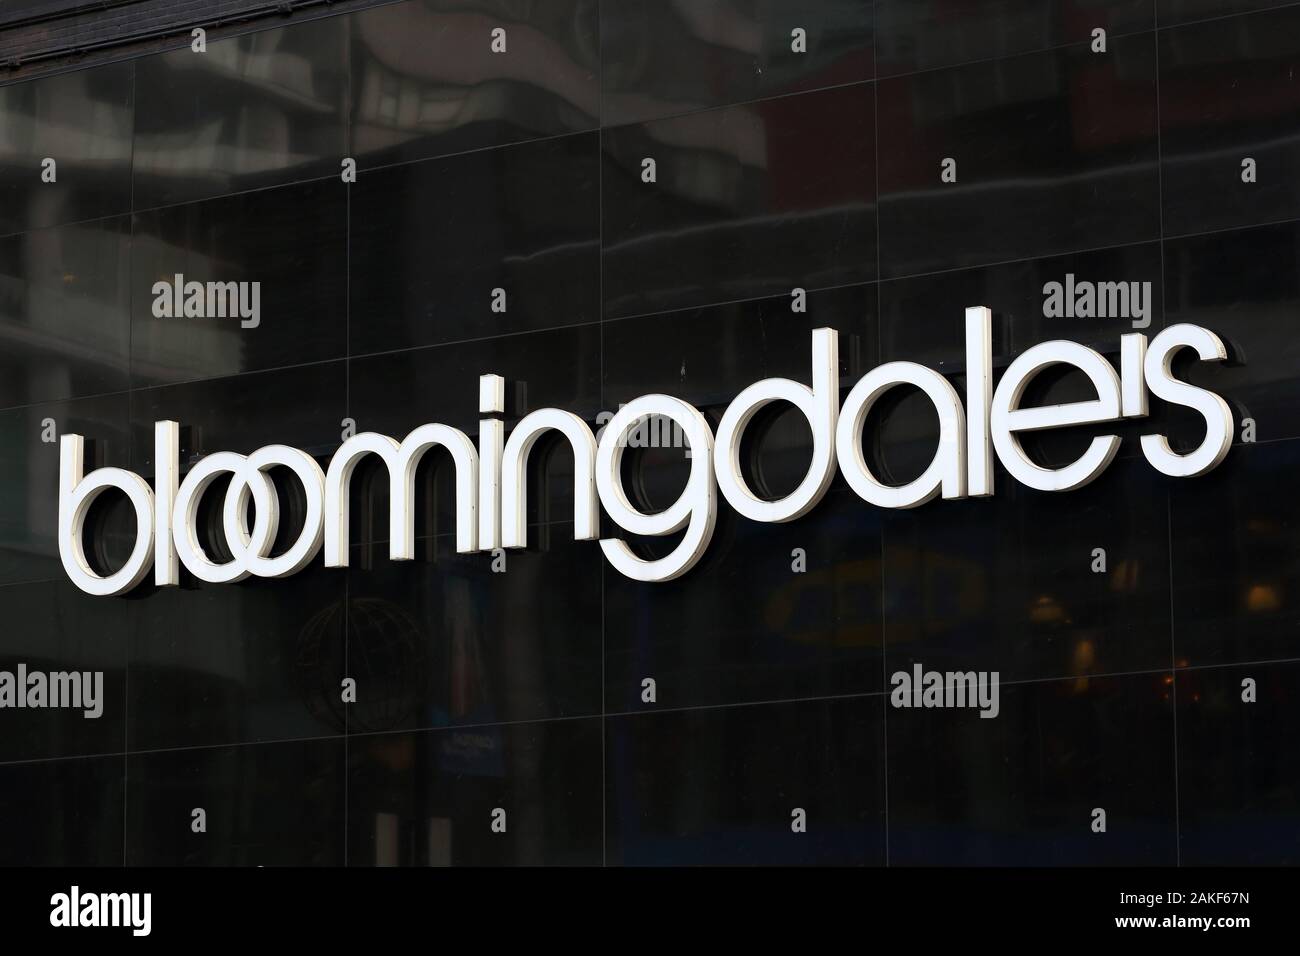 Bloomingdale's, New York – Visual Merchandising and Store Design